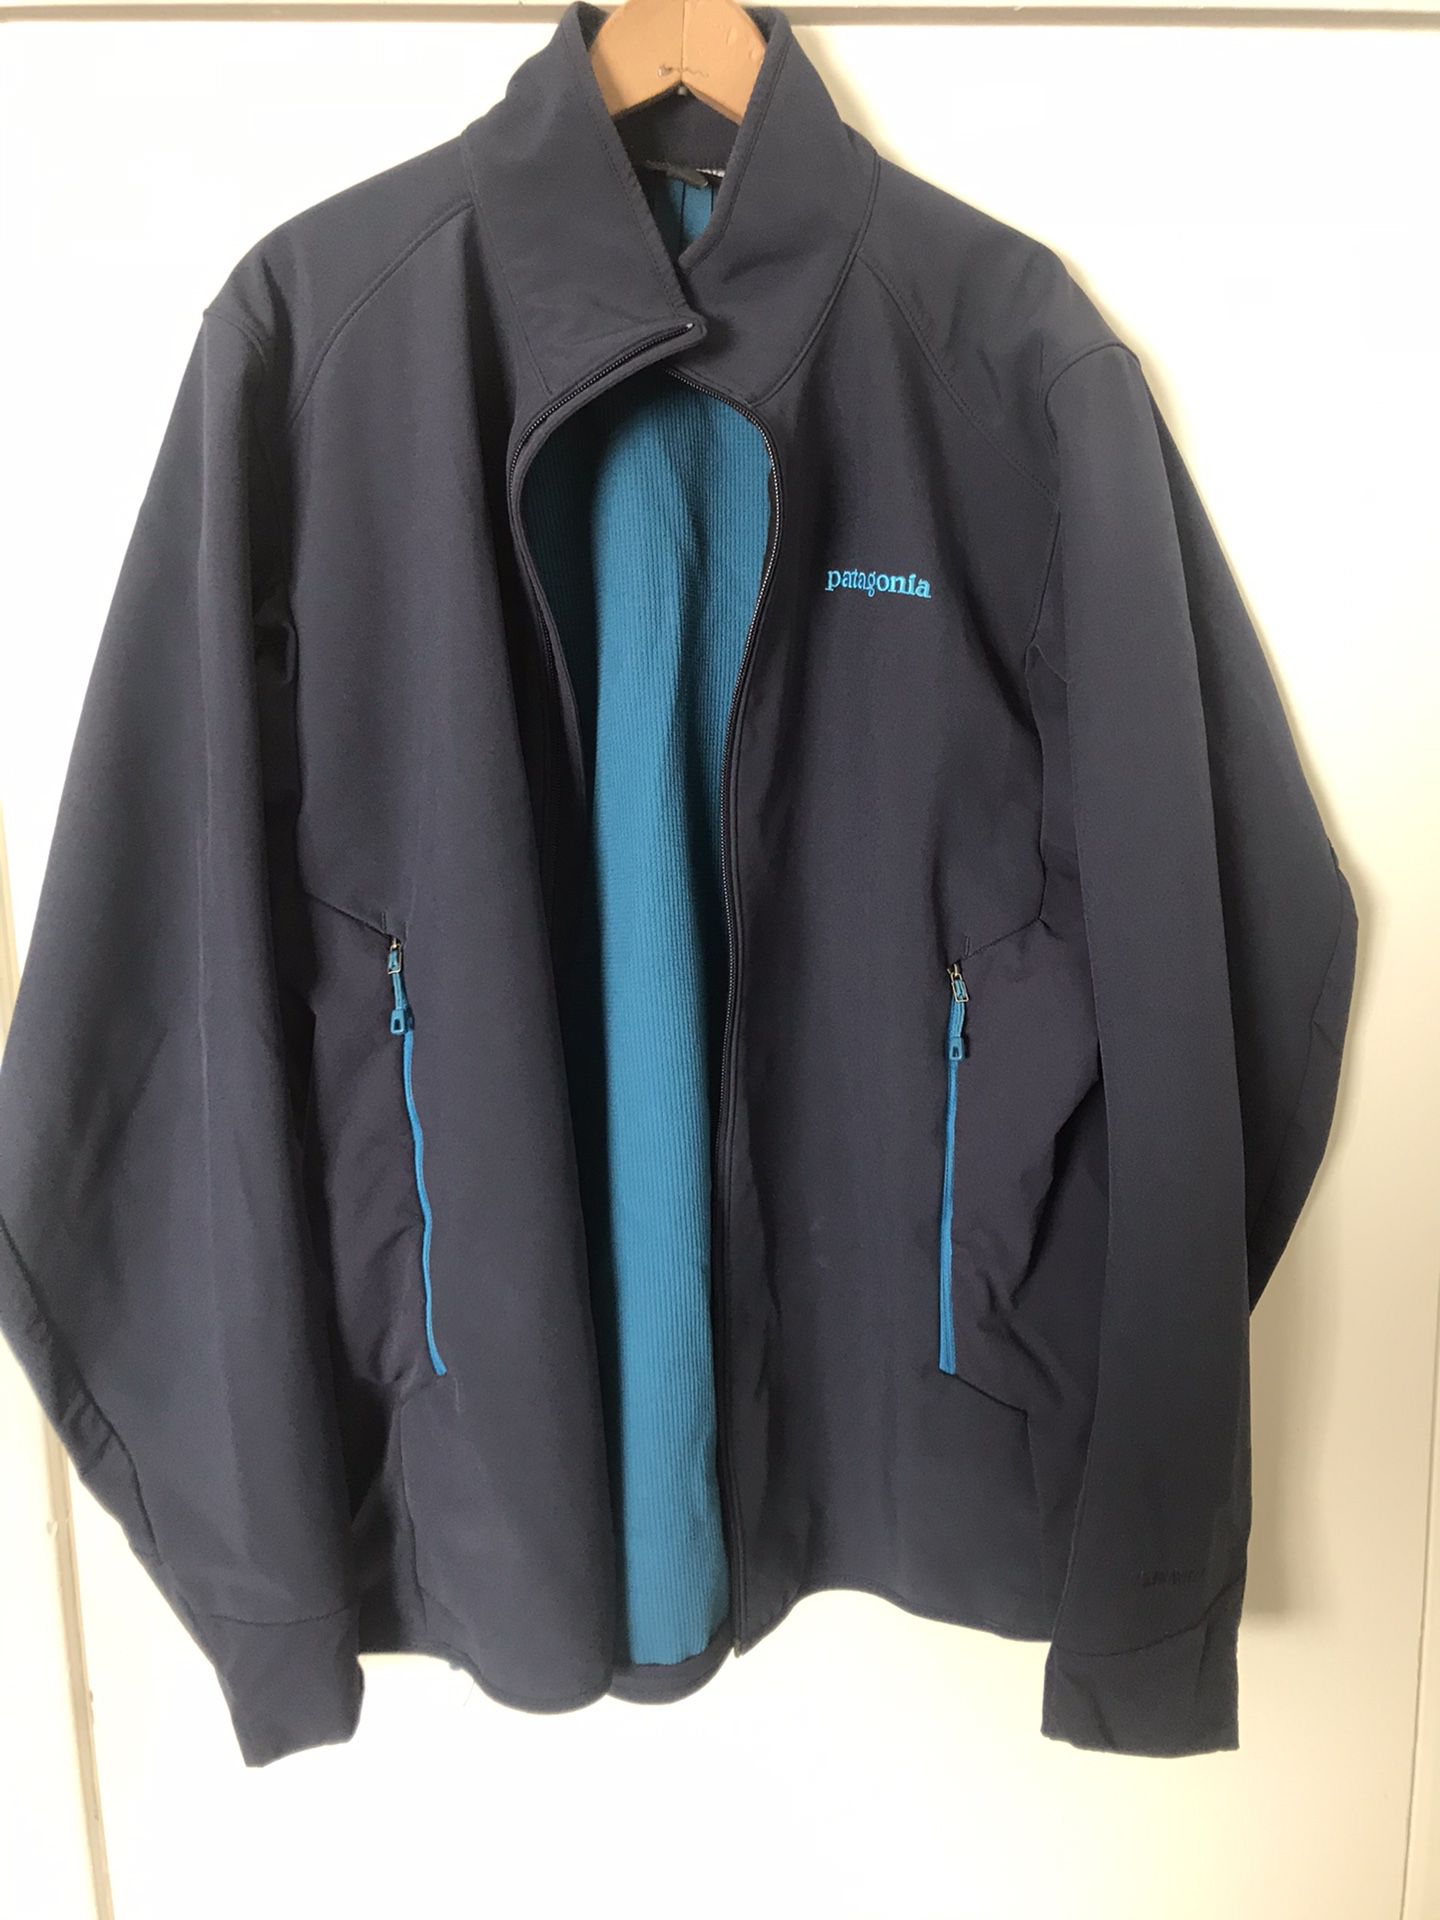 Patagonia jacket for men size L